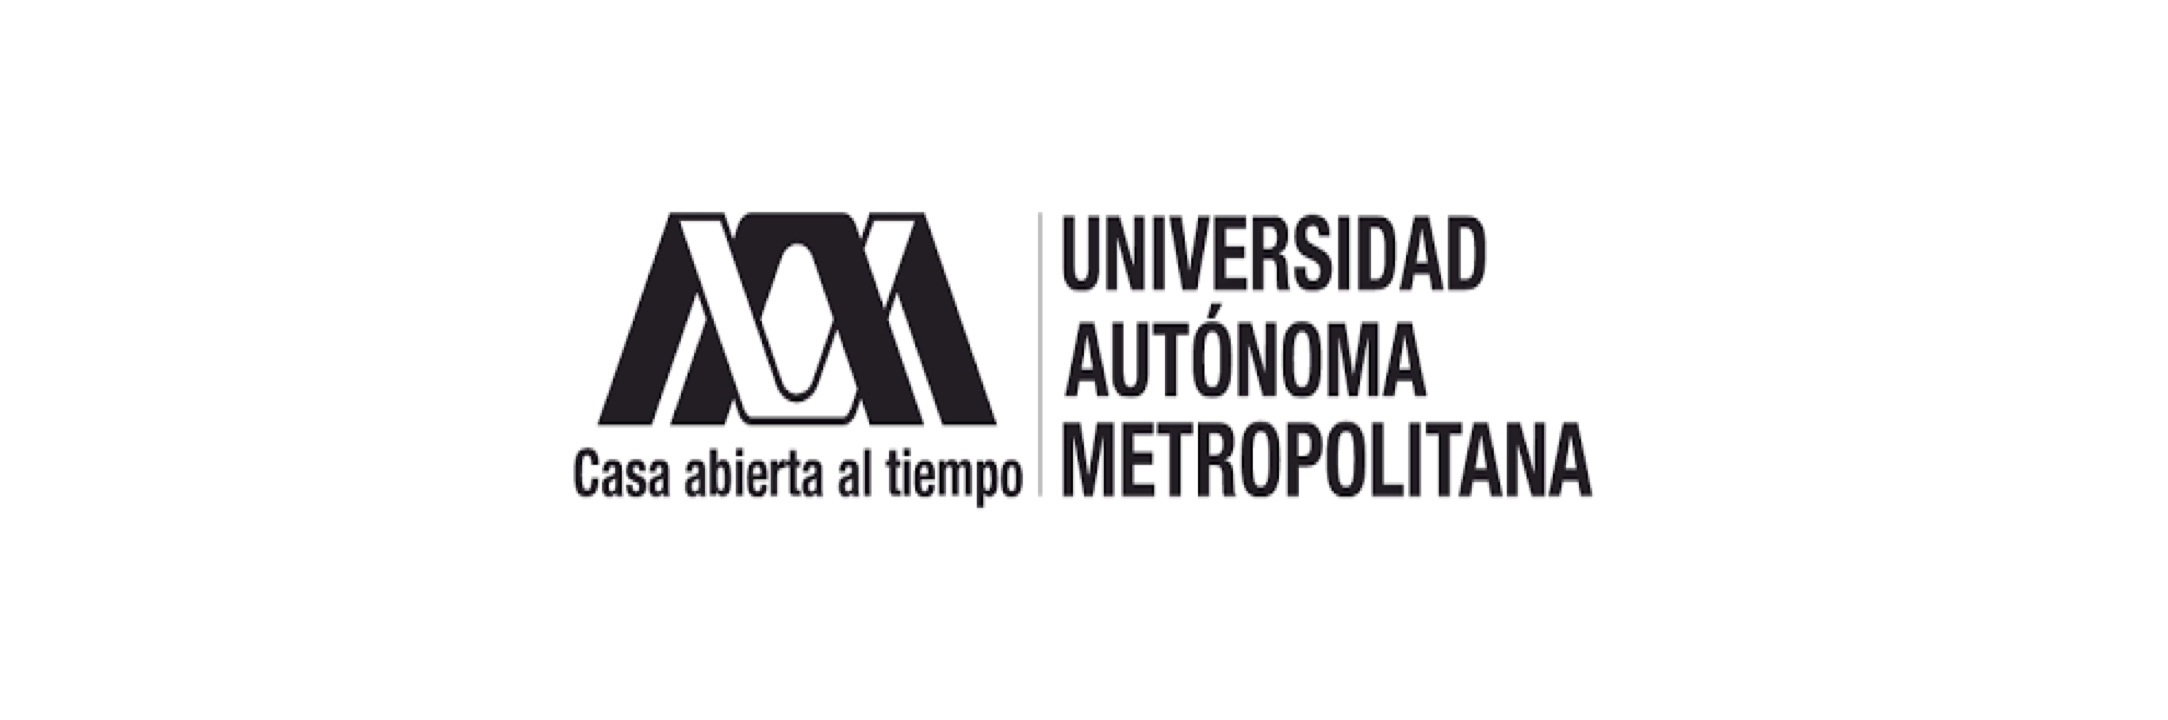 universidad autónoma metropolitana